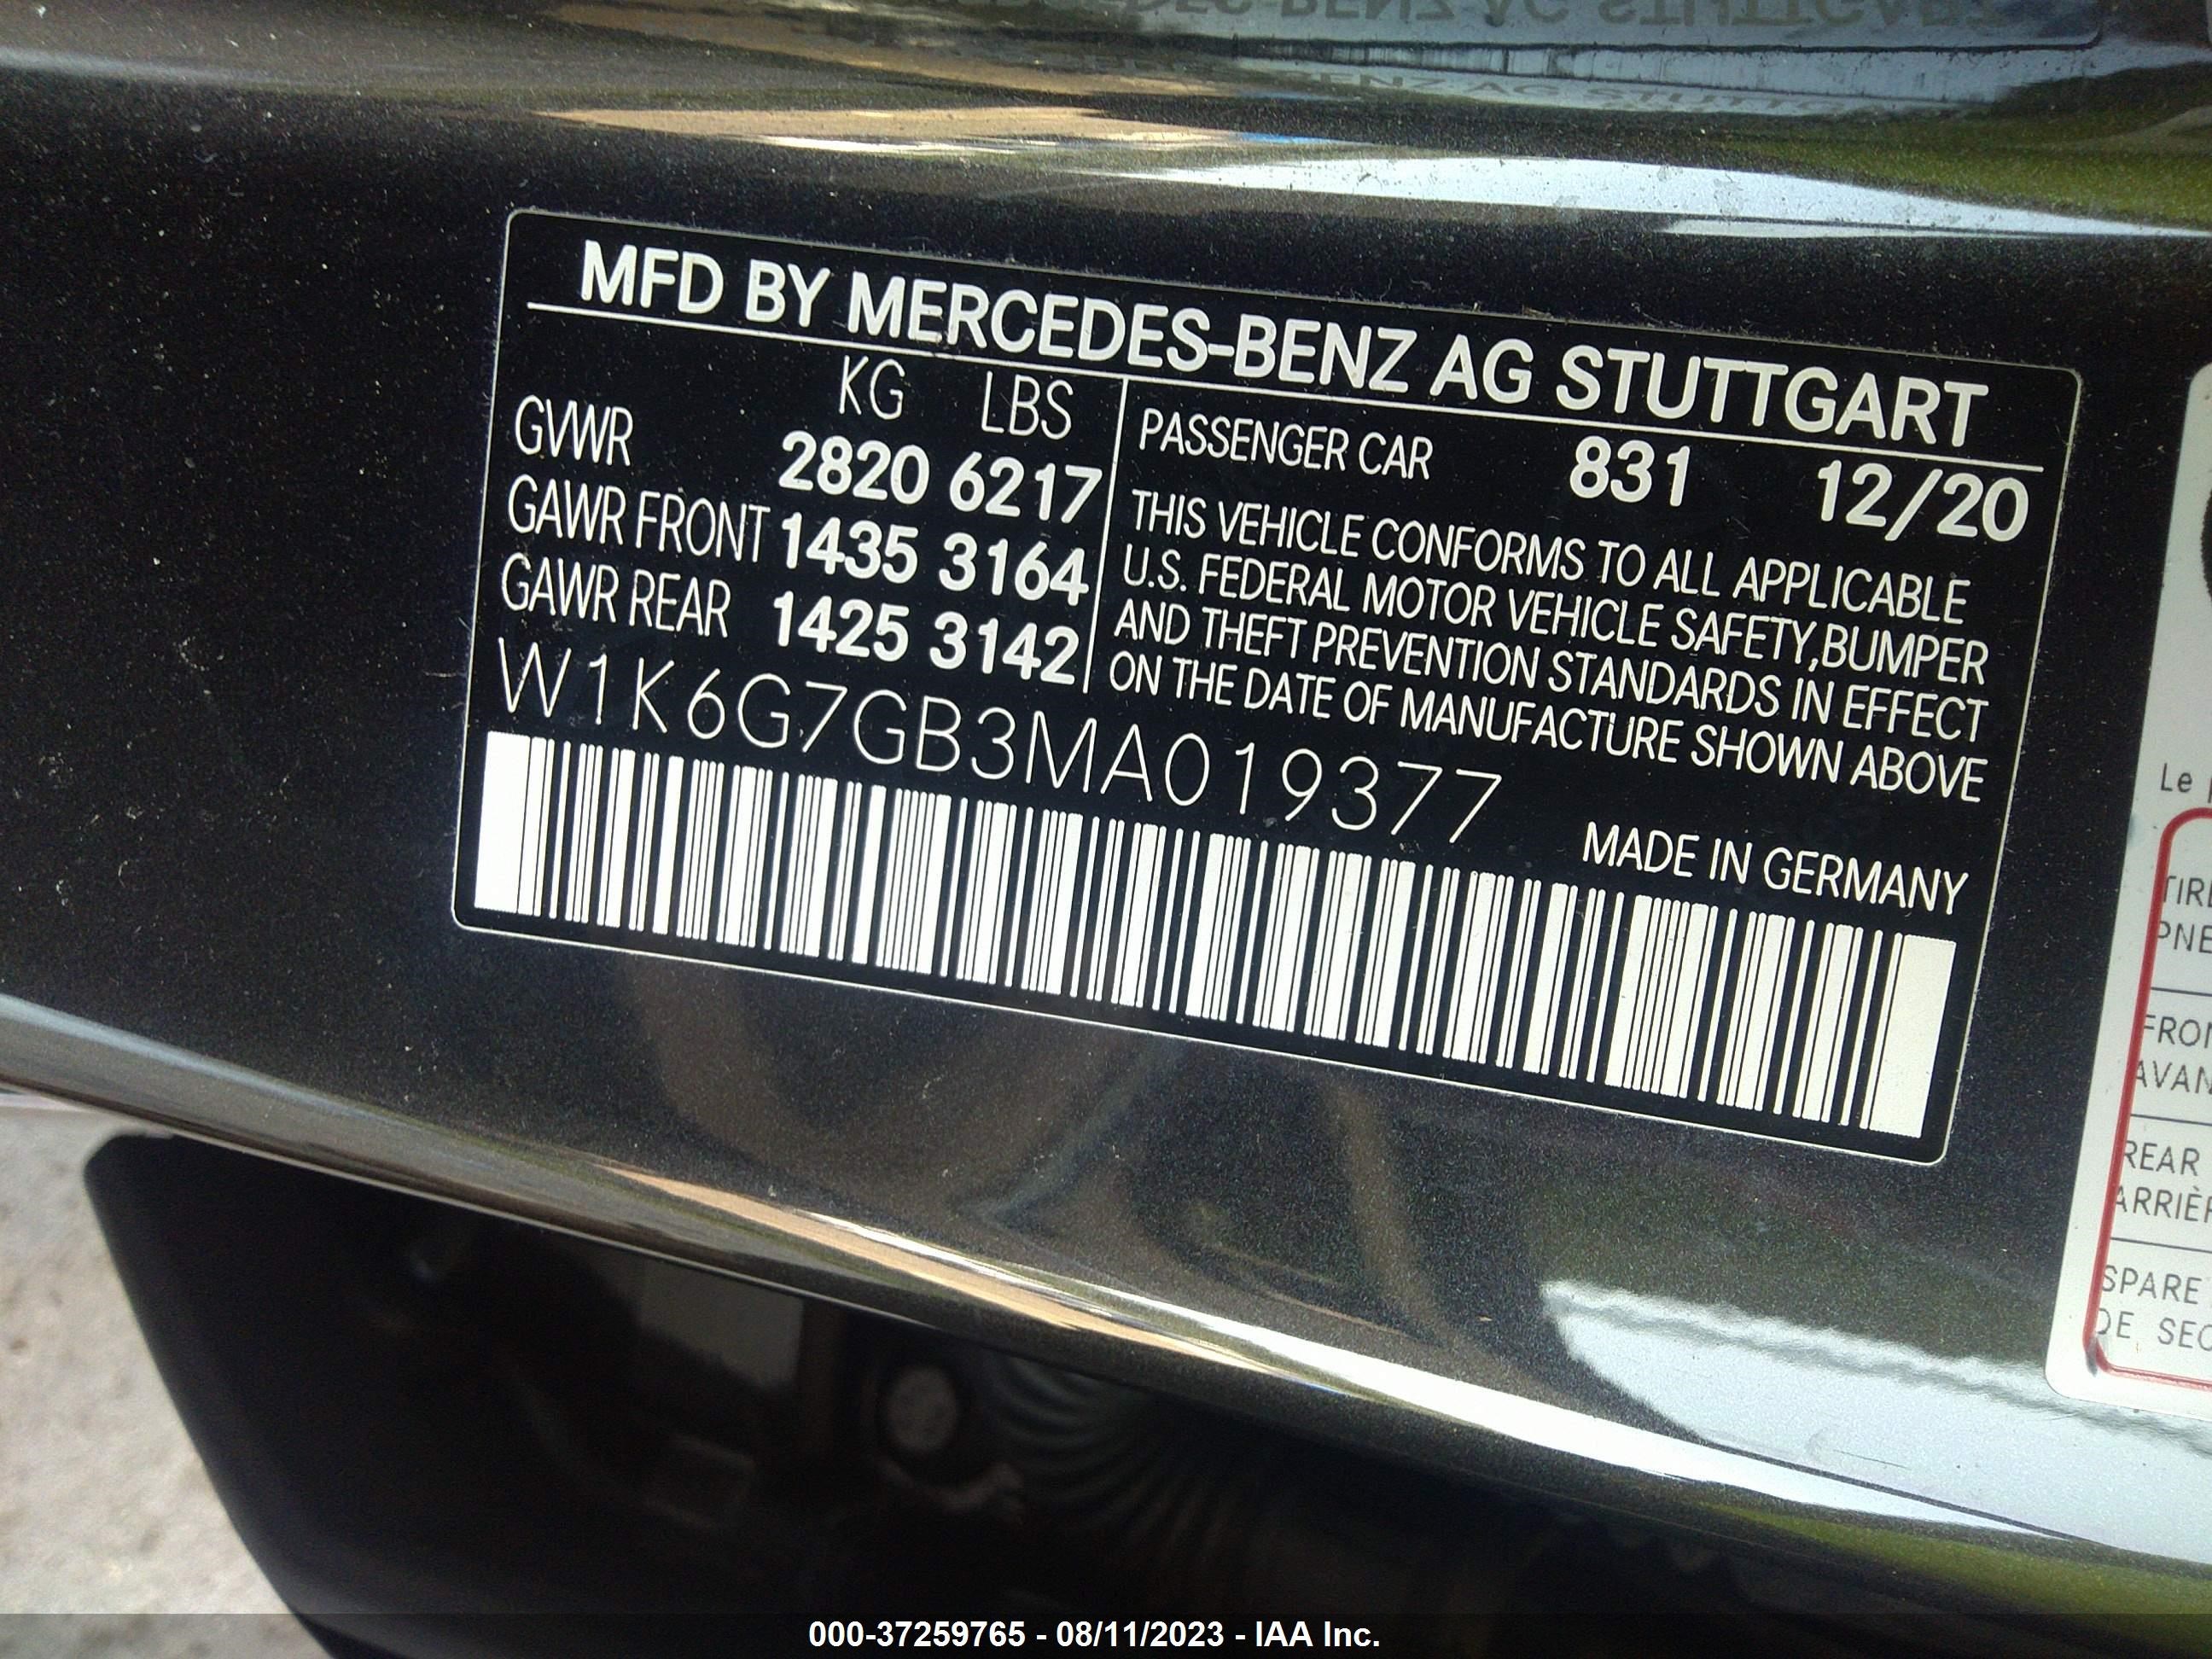 2021 Mercedes-Benz S-Class S 580 vin: W1K6G7GB3MA019377